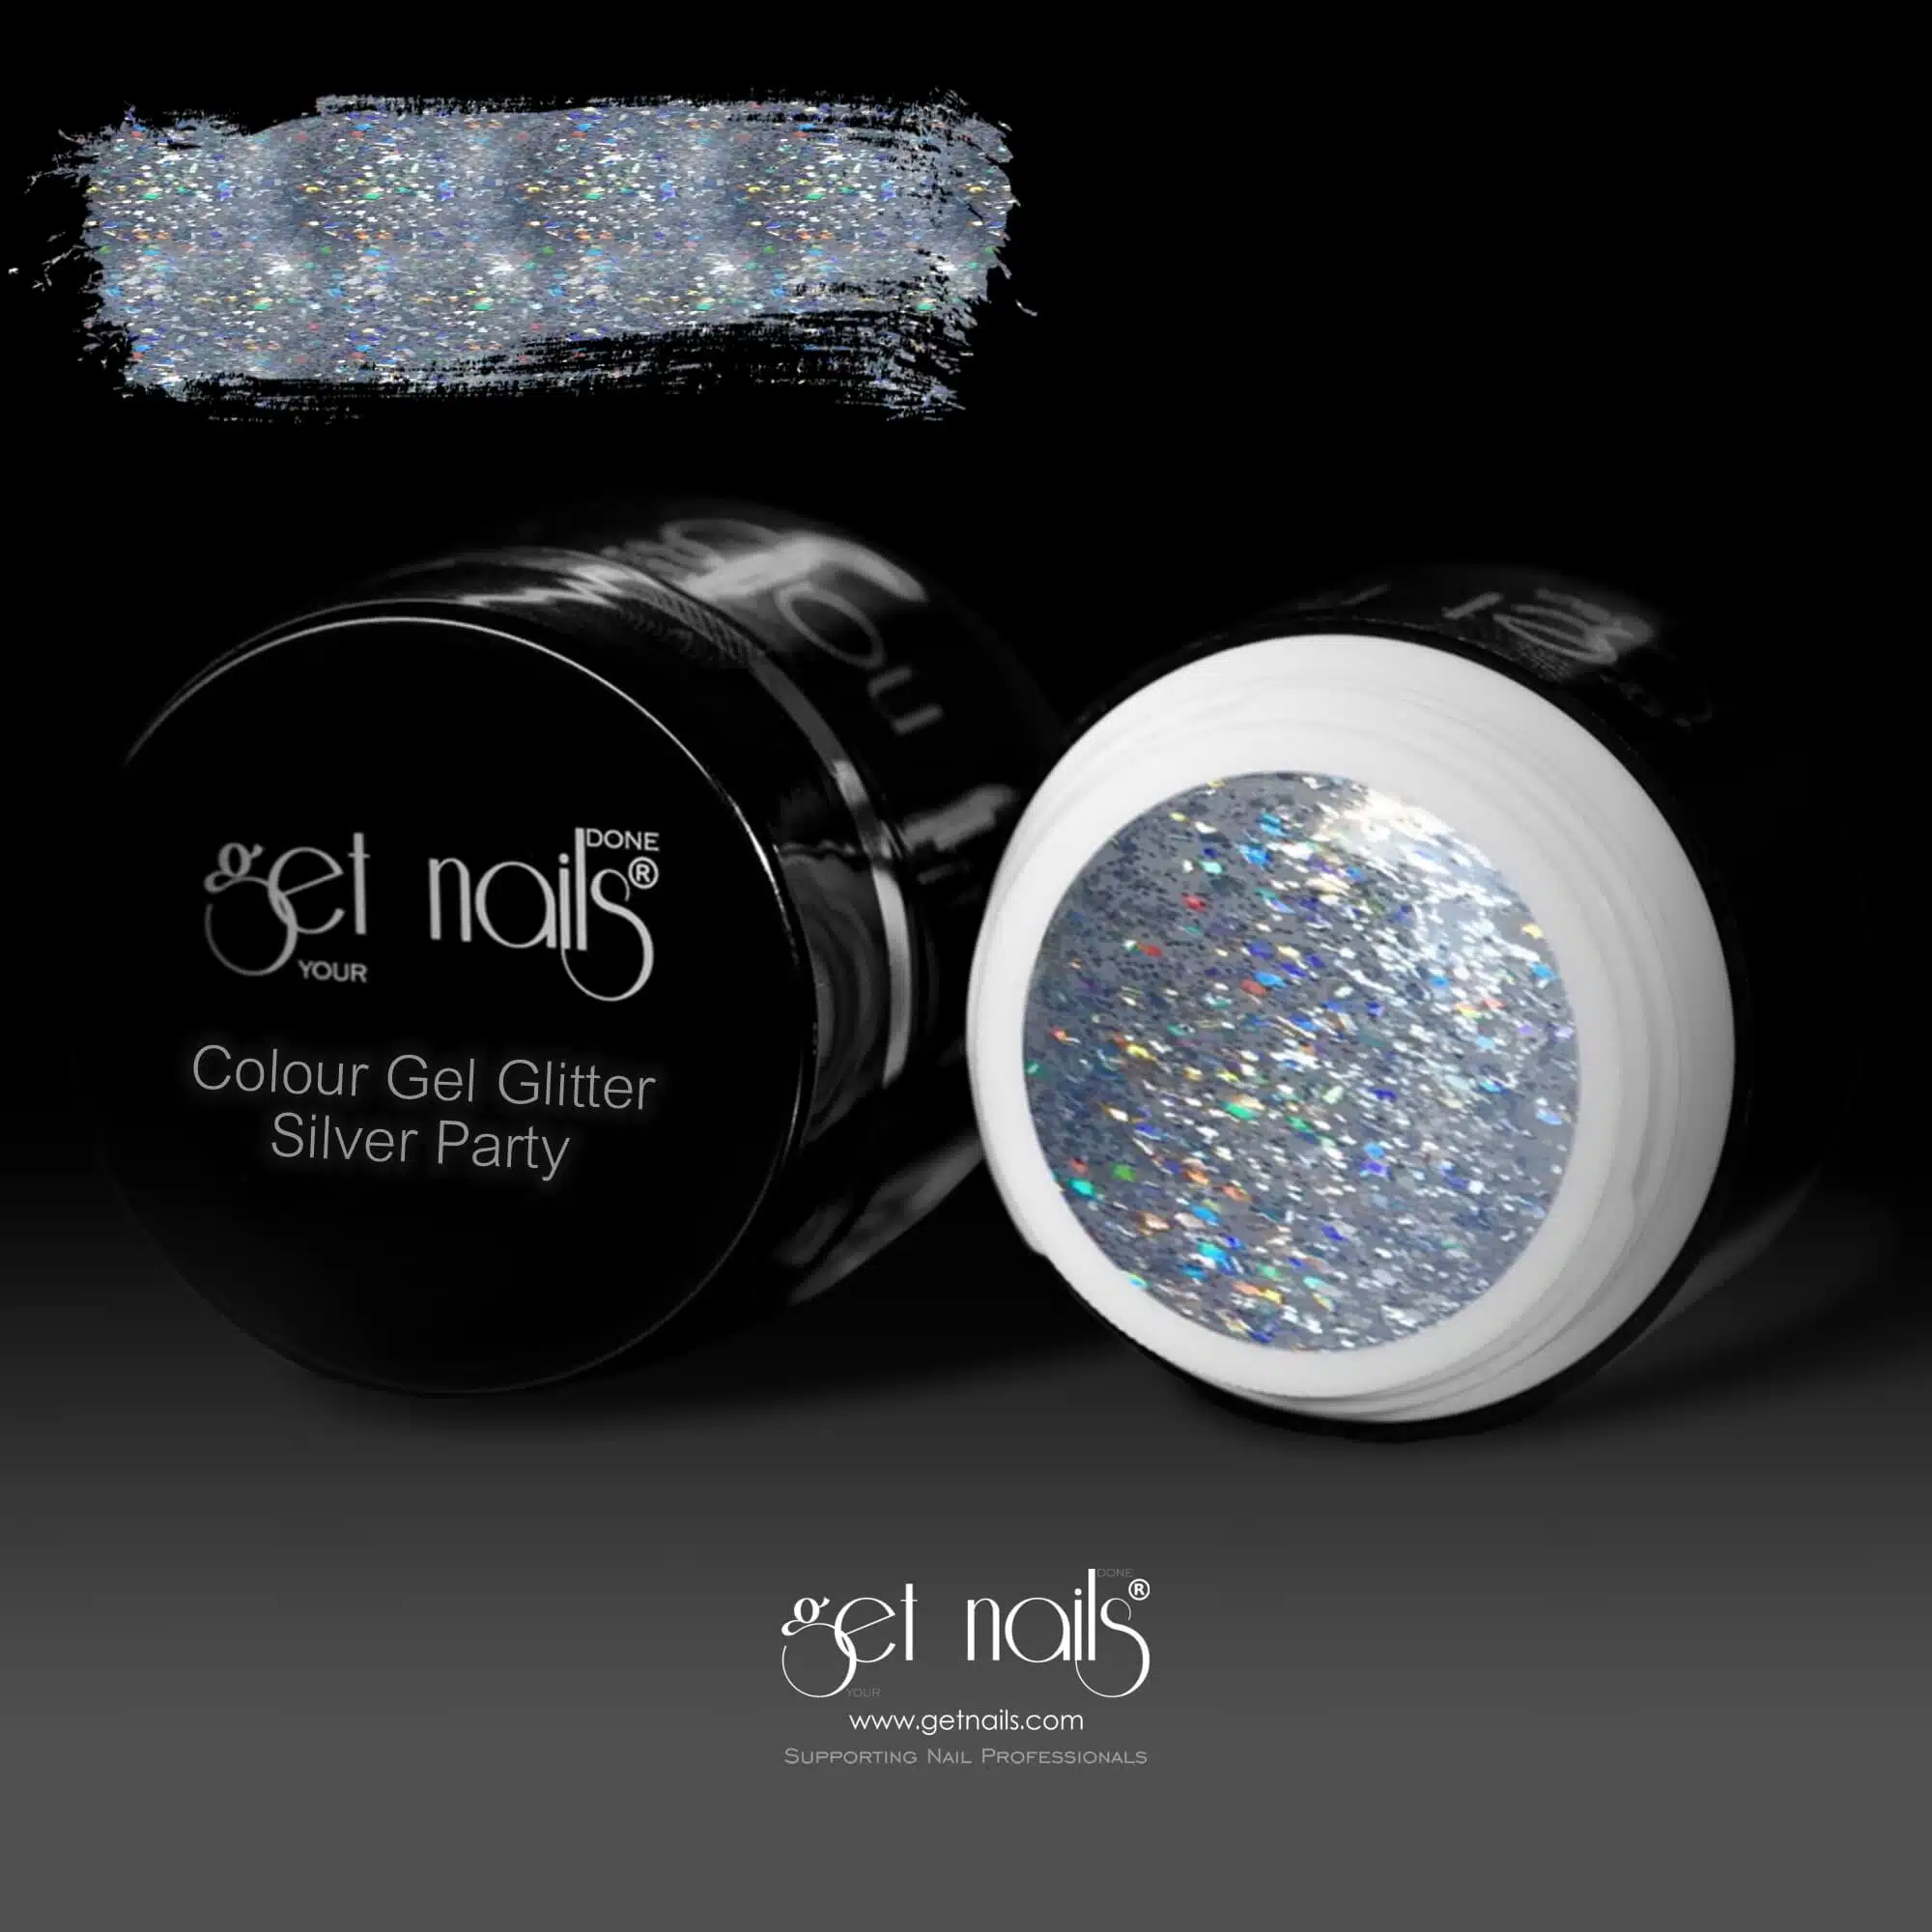 Get Nails Austria - Gel colorato Glitter Silver Party 5g